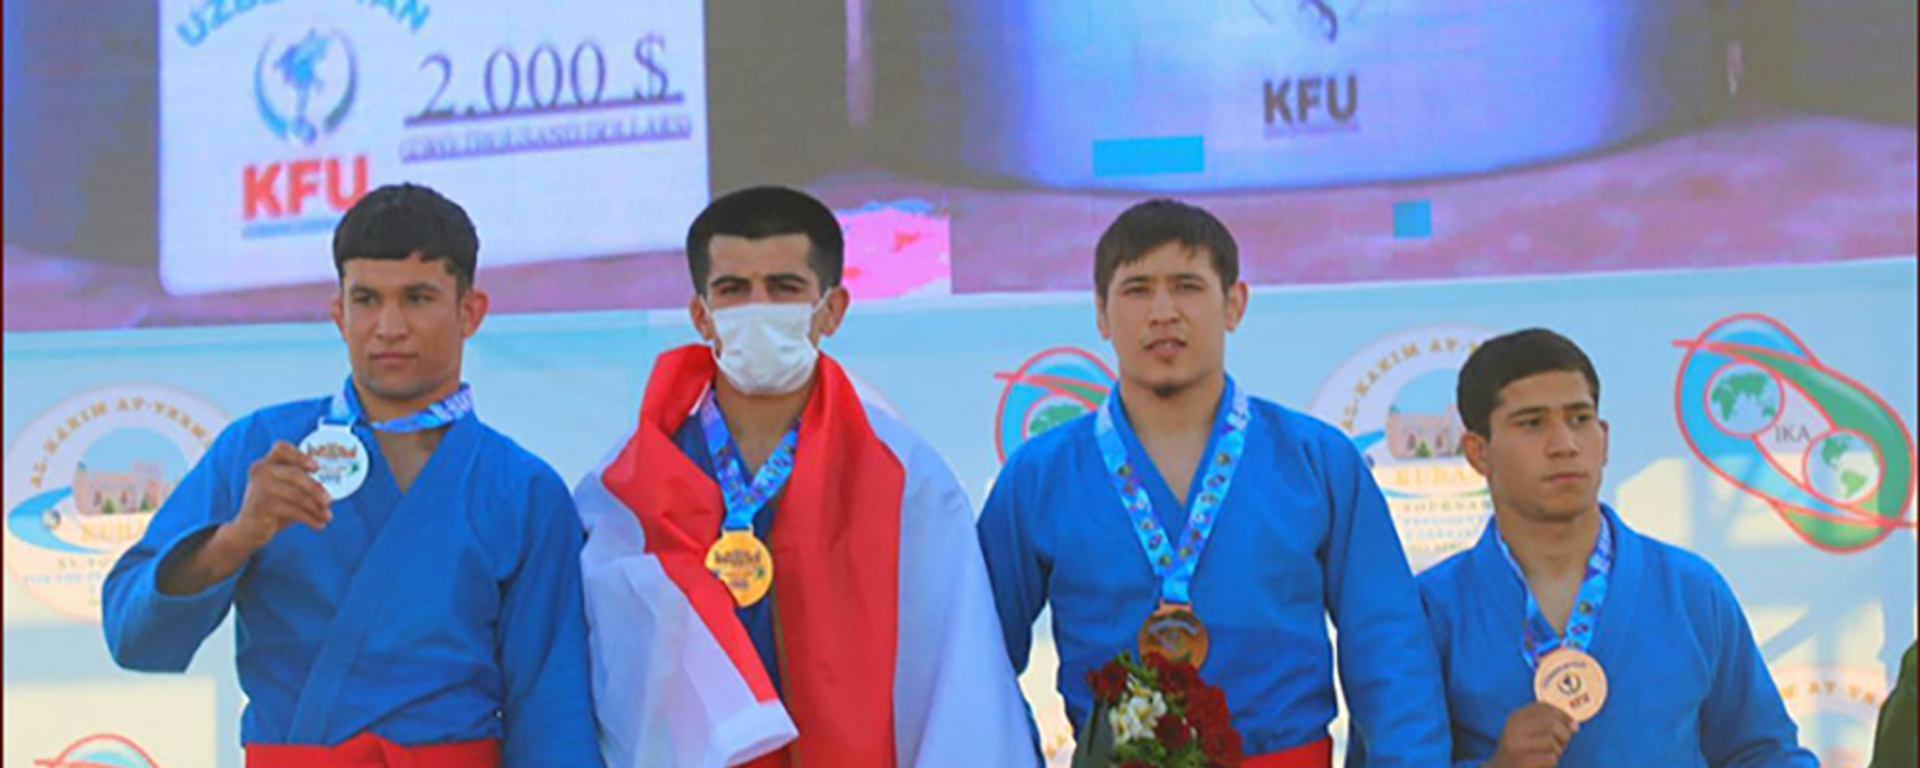 Мухаммадризо Кувватов - победитель международного конкурса Кураш - Sputnik Таджикистан, 1920, 13.04.2021